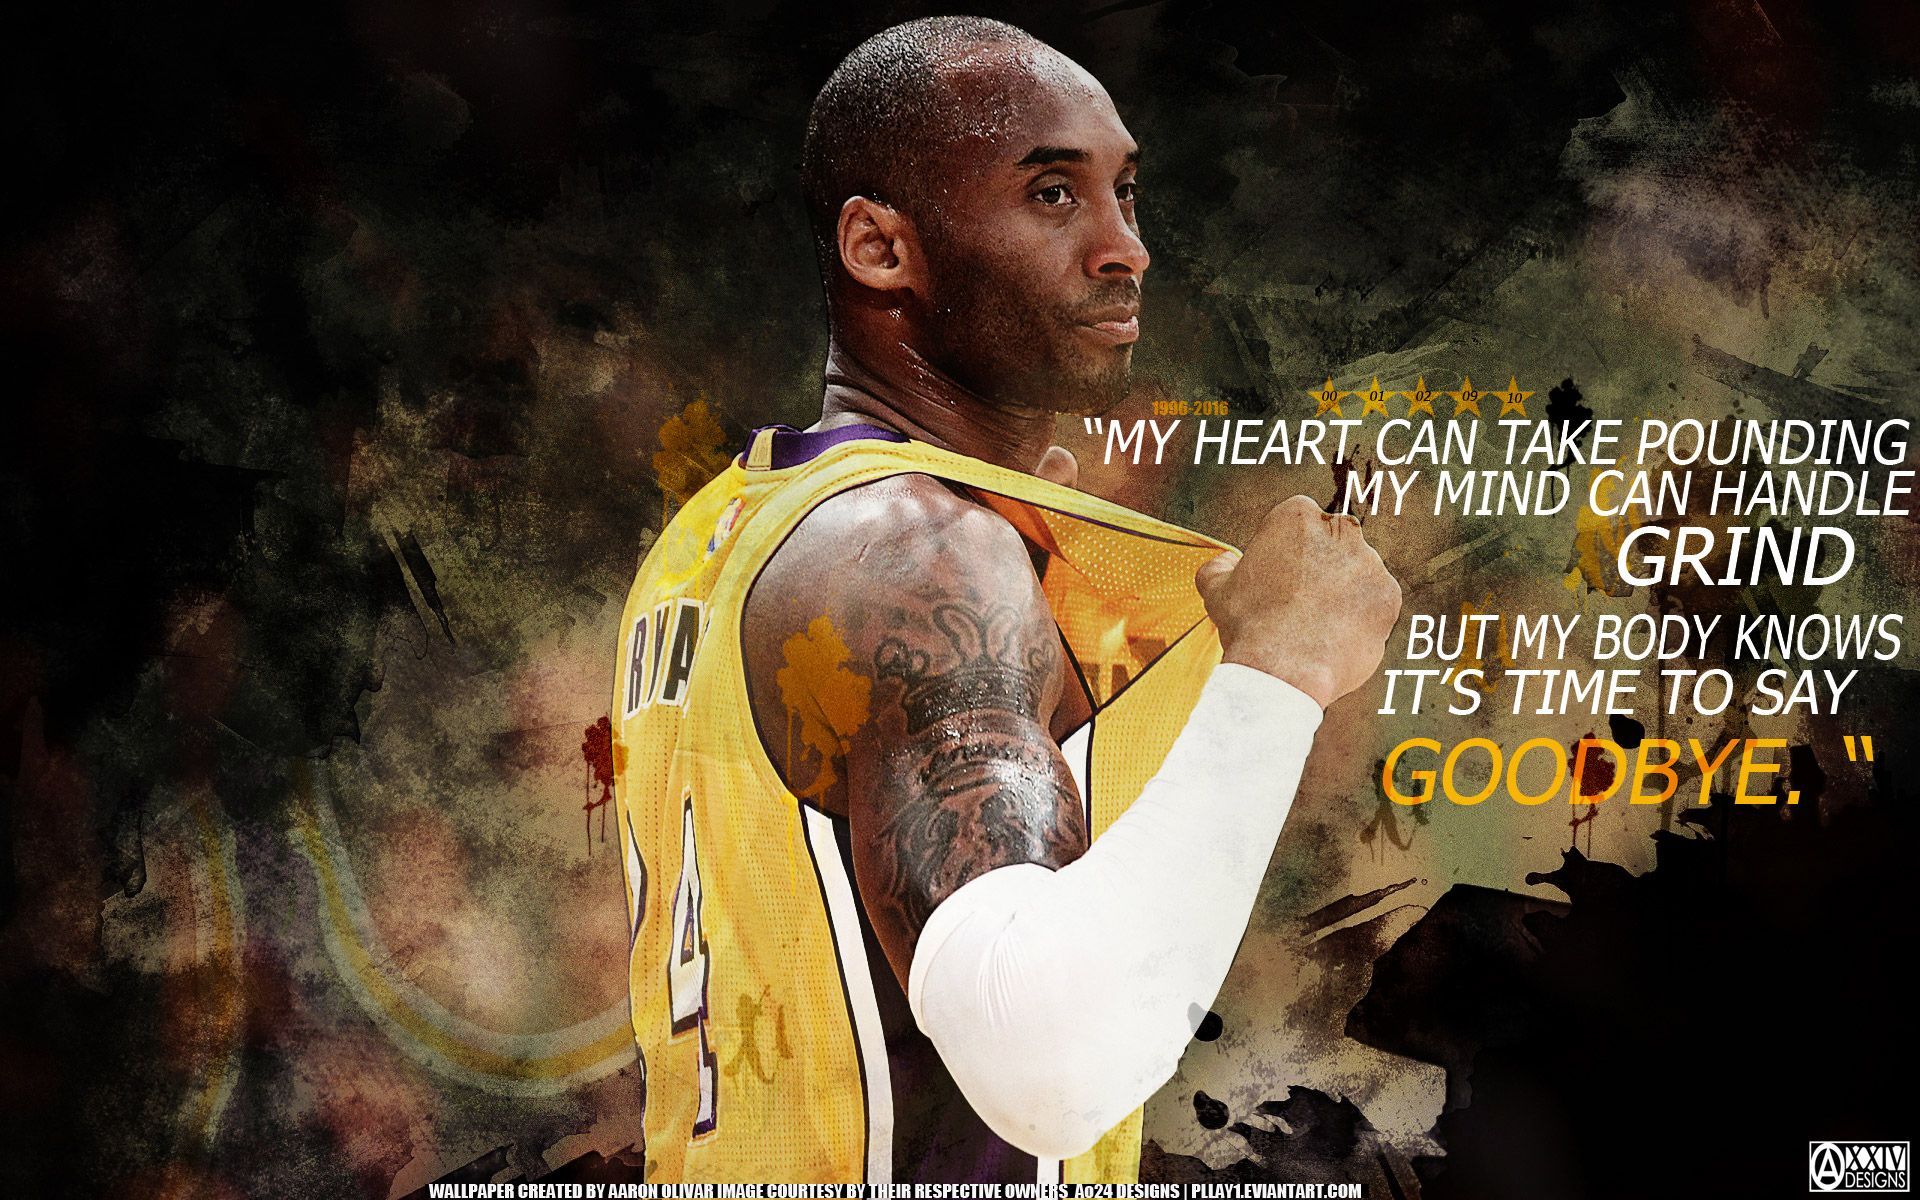 Los Angeles Lakers Wallpaper. Kobe bryant quotes, Kobe bryant retirement, Kobe bryant